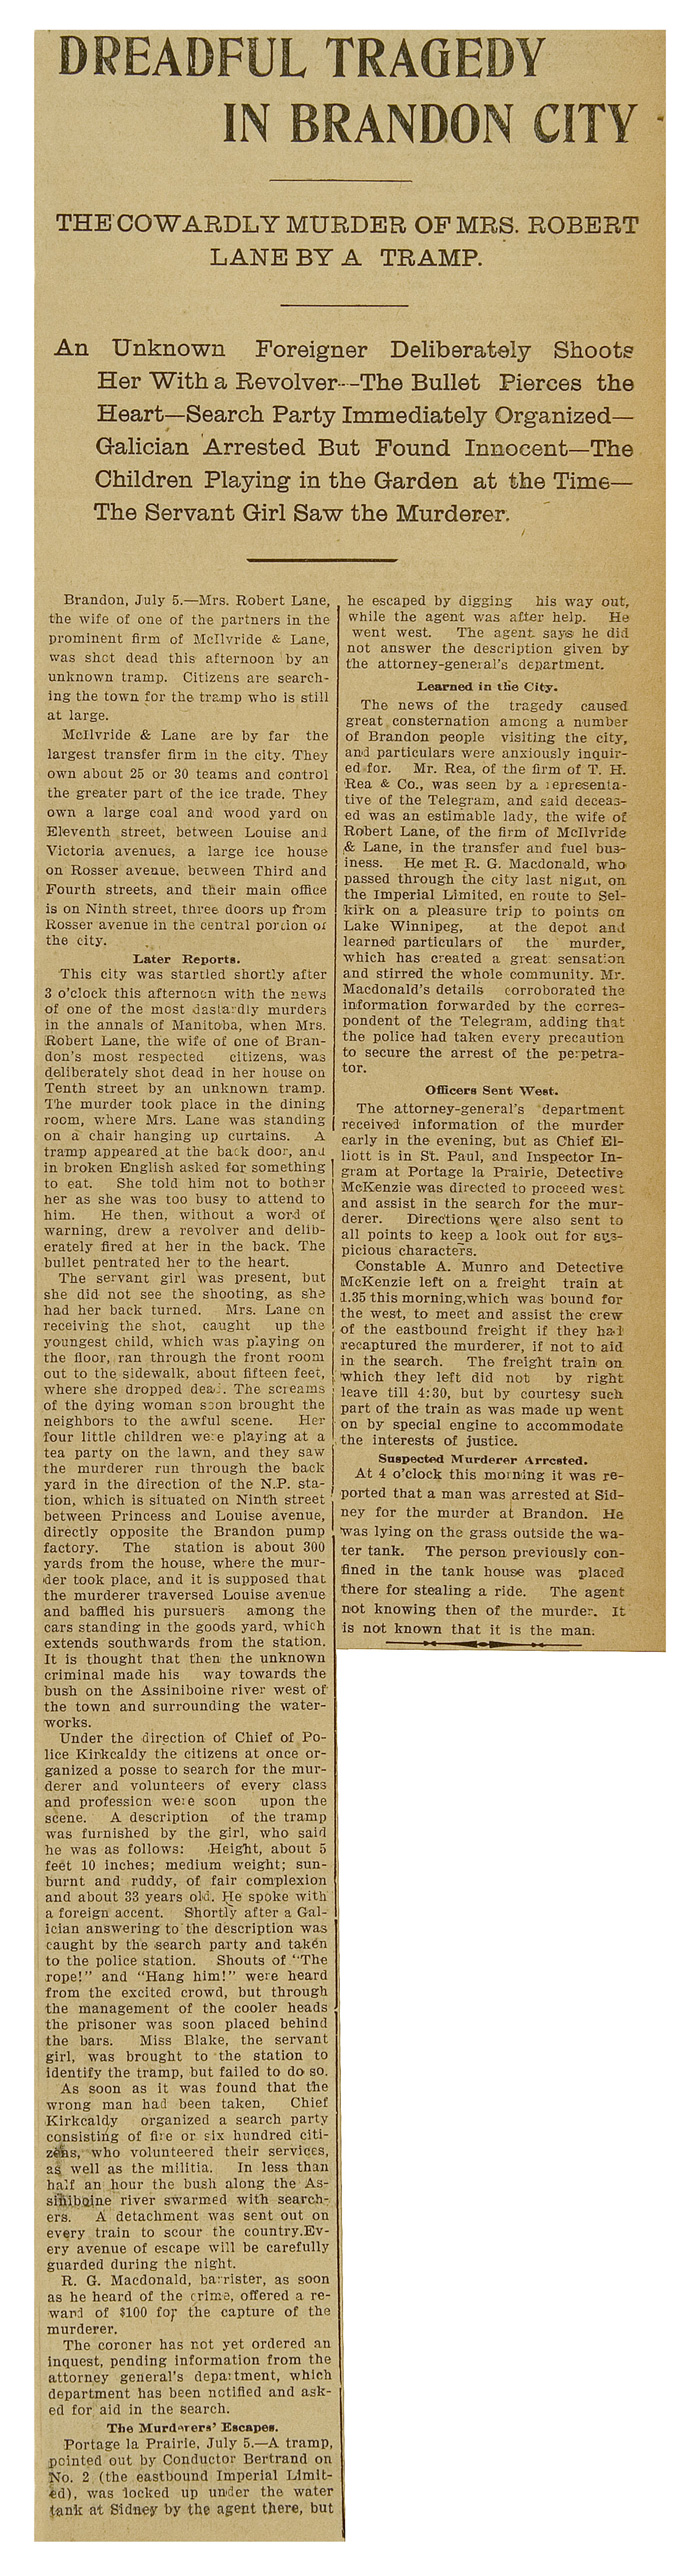 Article du Winnipeg Morning Telegram, 6 juillet 1899